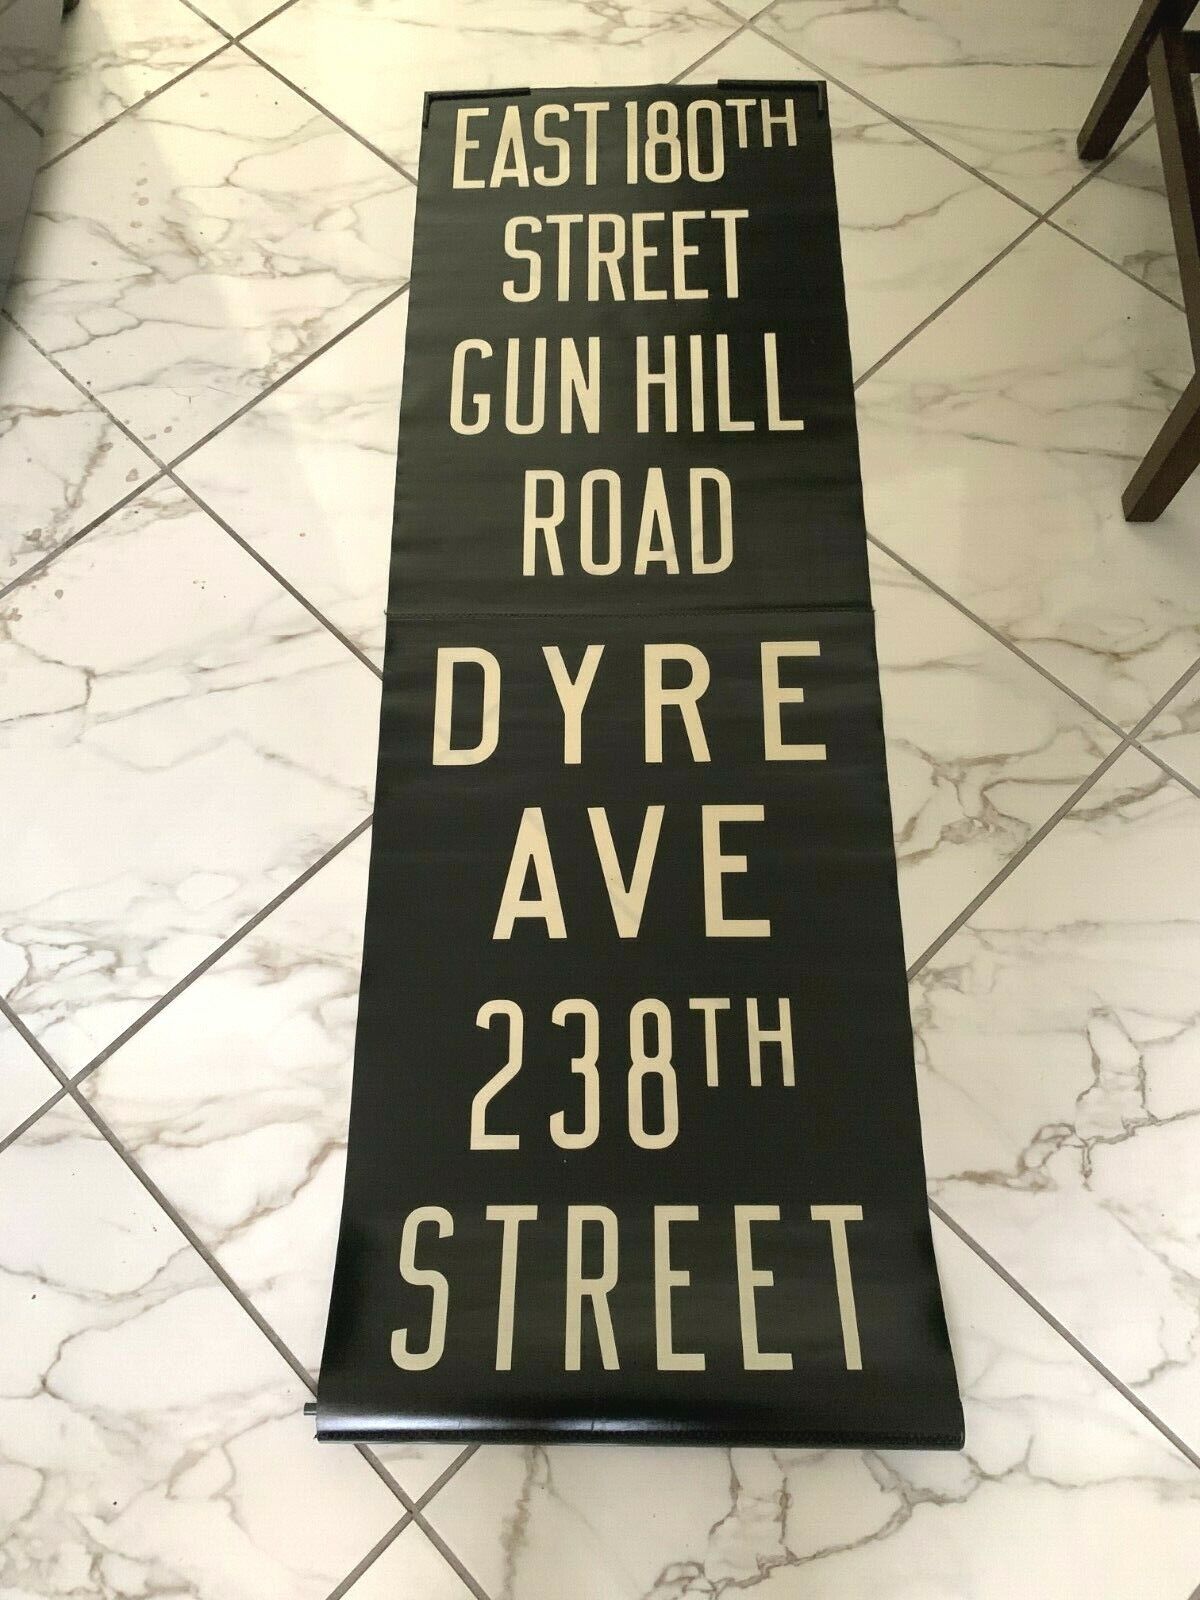 NY NYC SUBWAY ROLL SIGN GUN HILL ROAD DYRE AVENUE BRONX 238th STREET EAST 180th